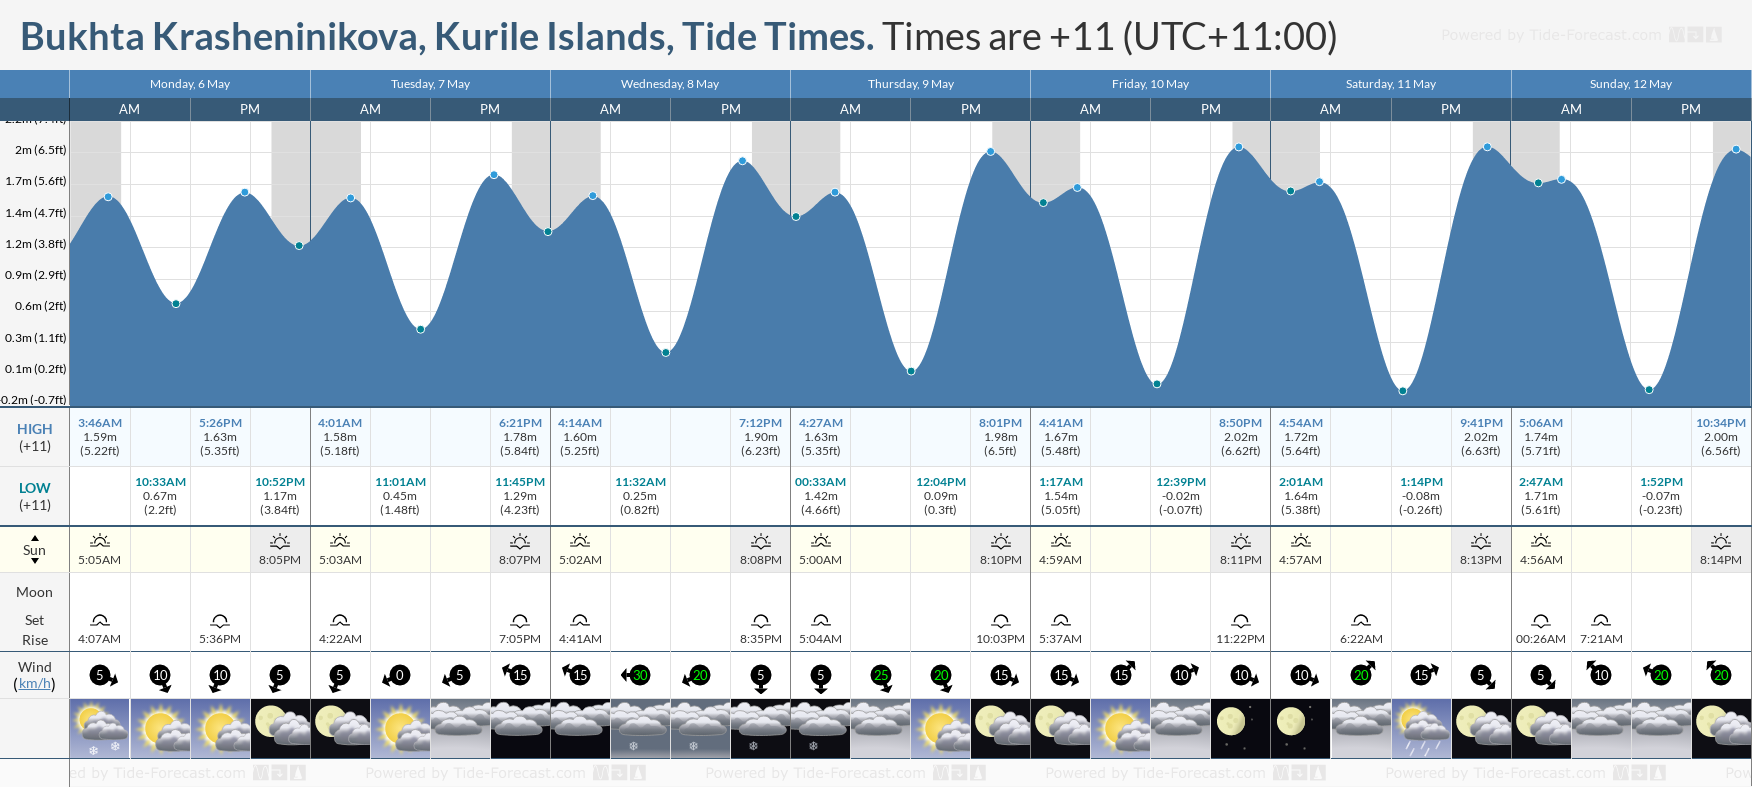 Bukhta Krasheninikova, Kurile Islands Tide Chart including high and low tide tide times for the next 7 days